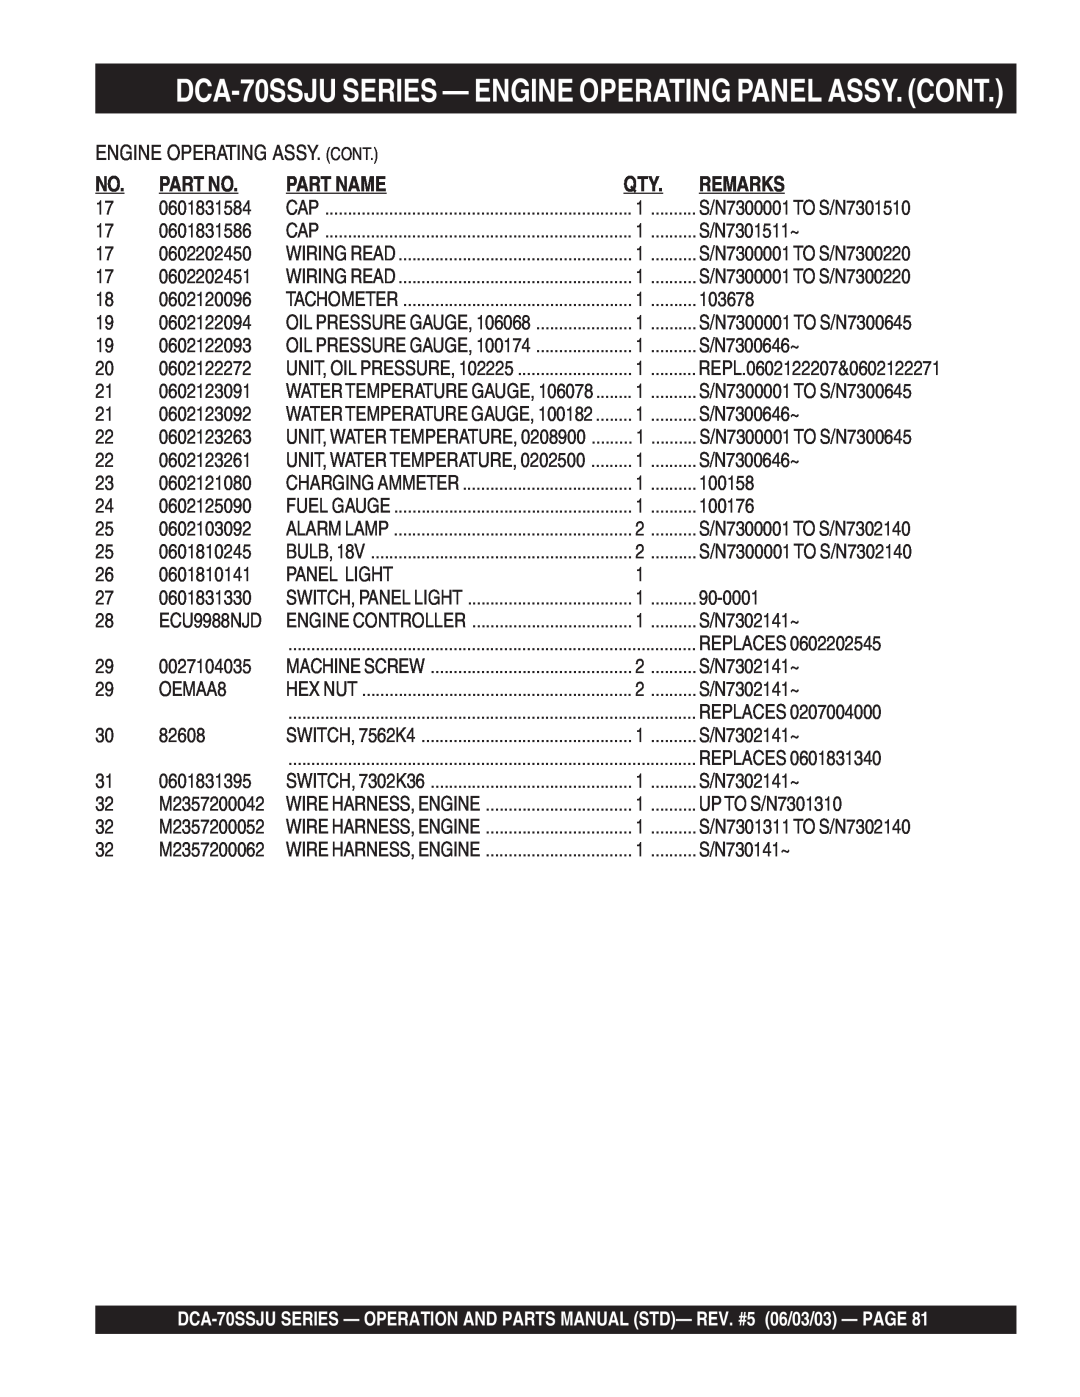 Multiquip DCA-70SSJU operation manual Part No, Part Name, Remarks, 0601831584 